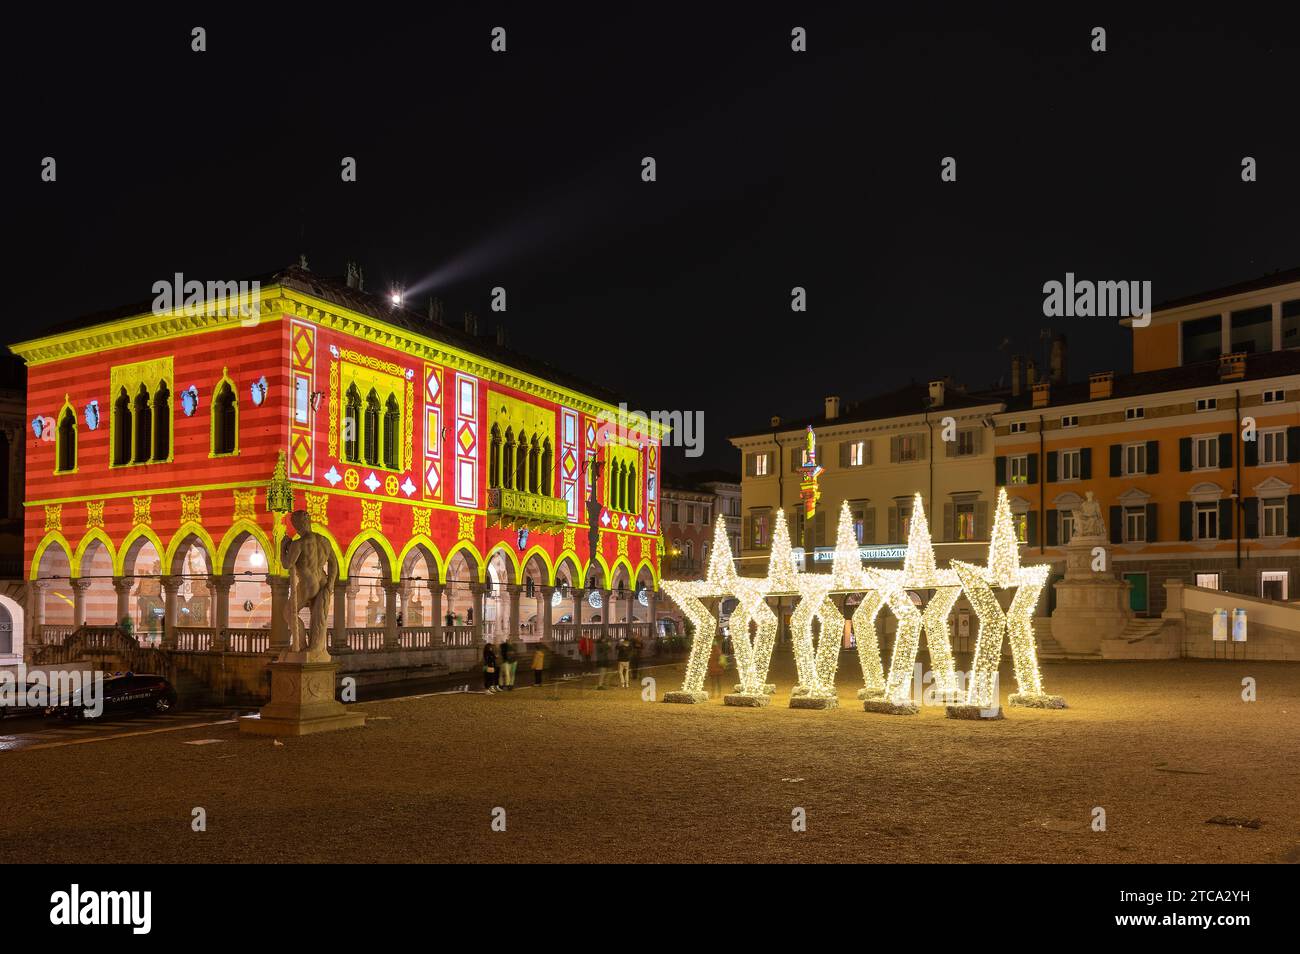 Udine, Italy (8th December 2023) - Piazza della libertà square with Christmas lighting decorations Stock Photo